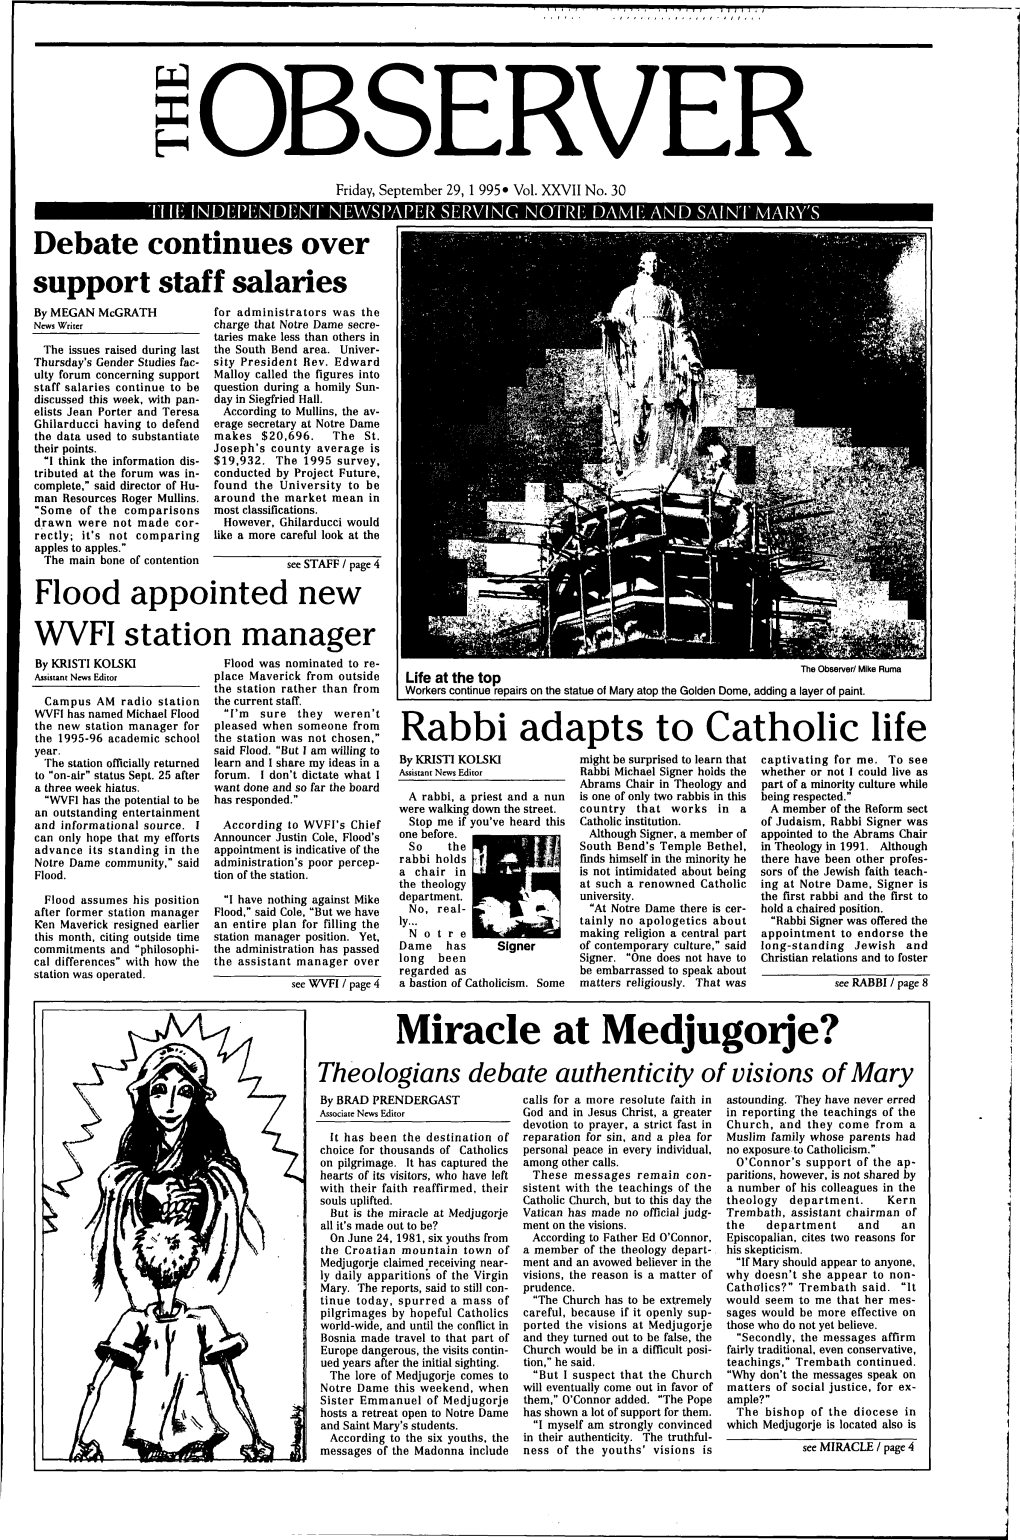 Rabbi Adapts to Catholic Life Miracle at Medjugolje?